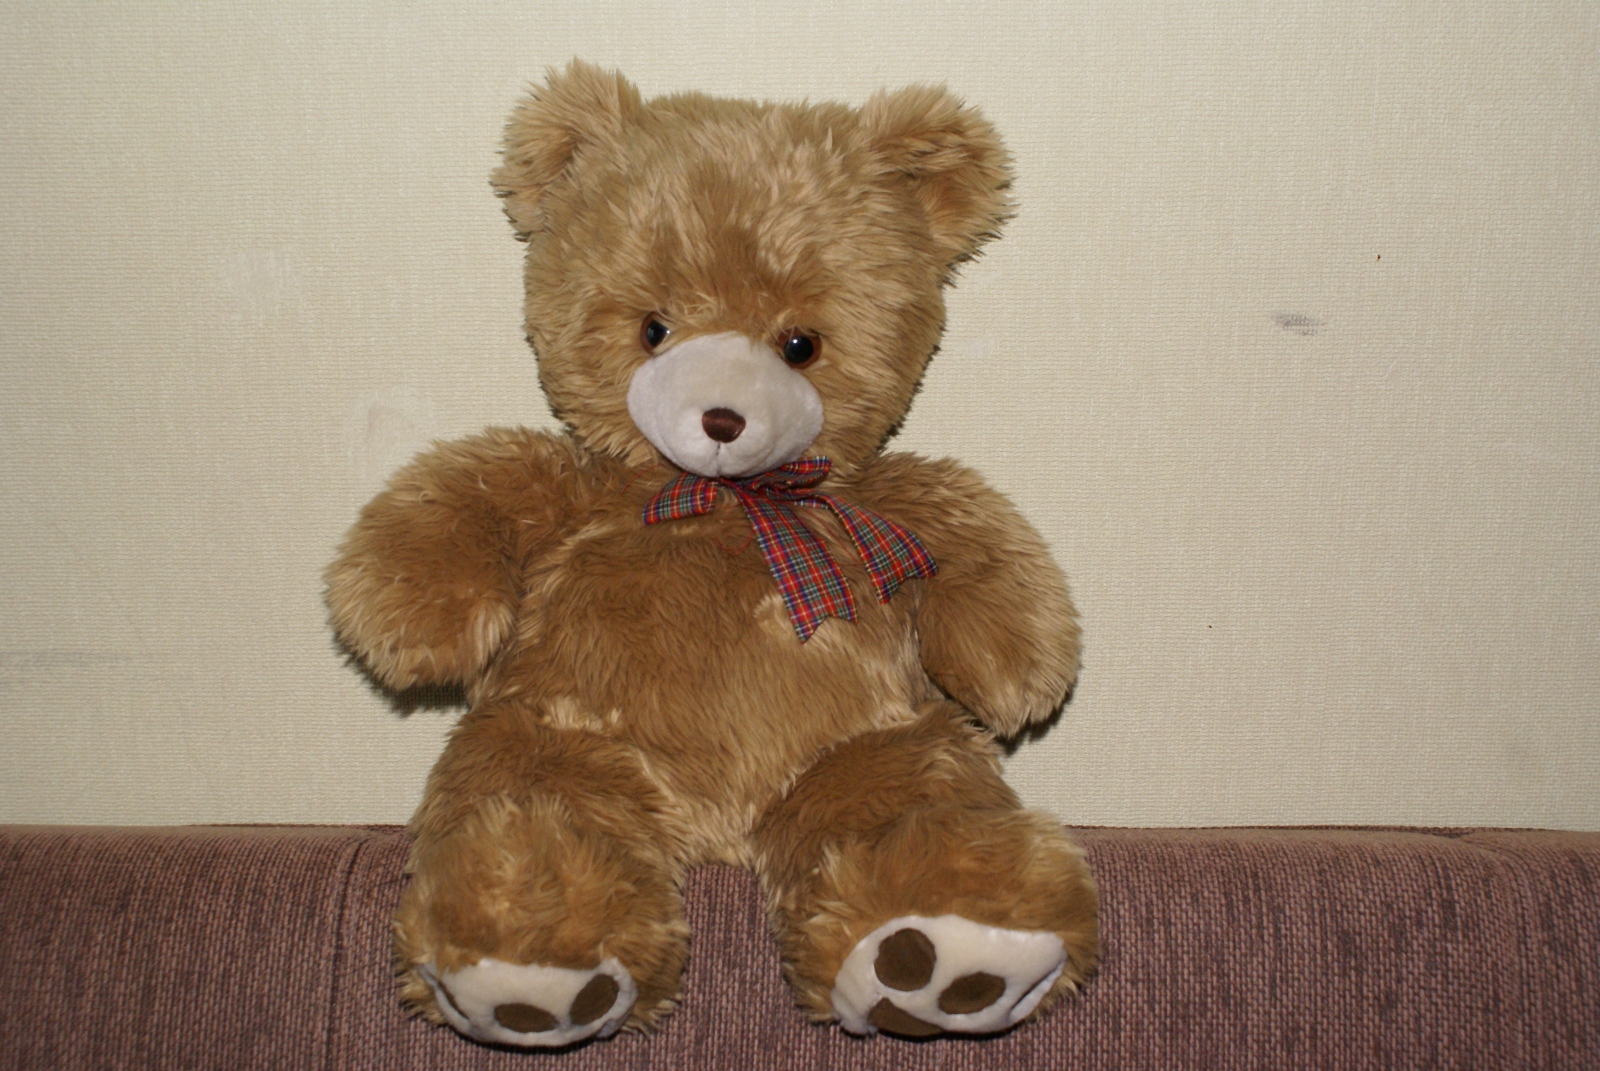 File:Teddy bear.jpg